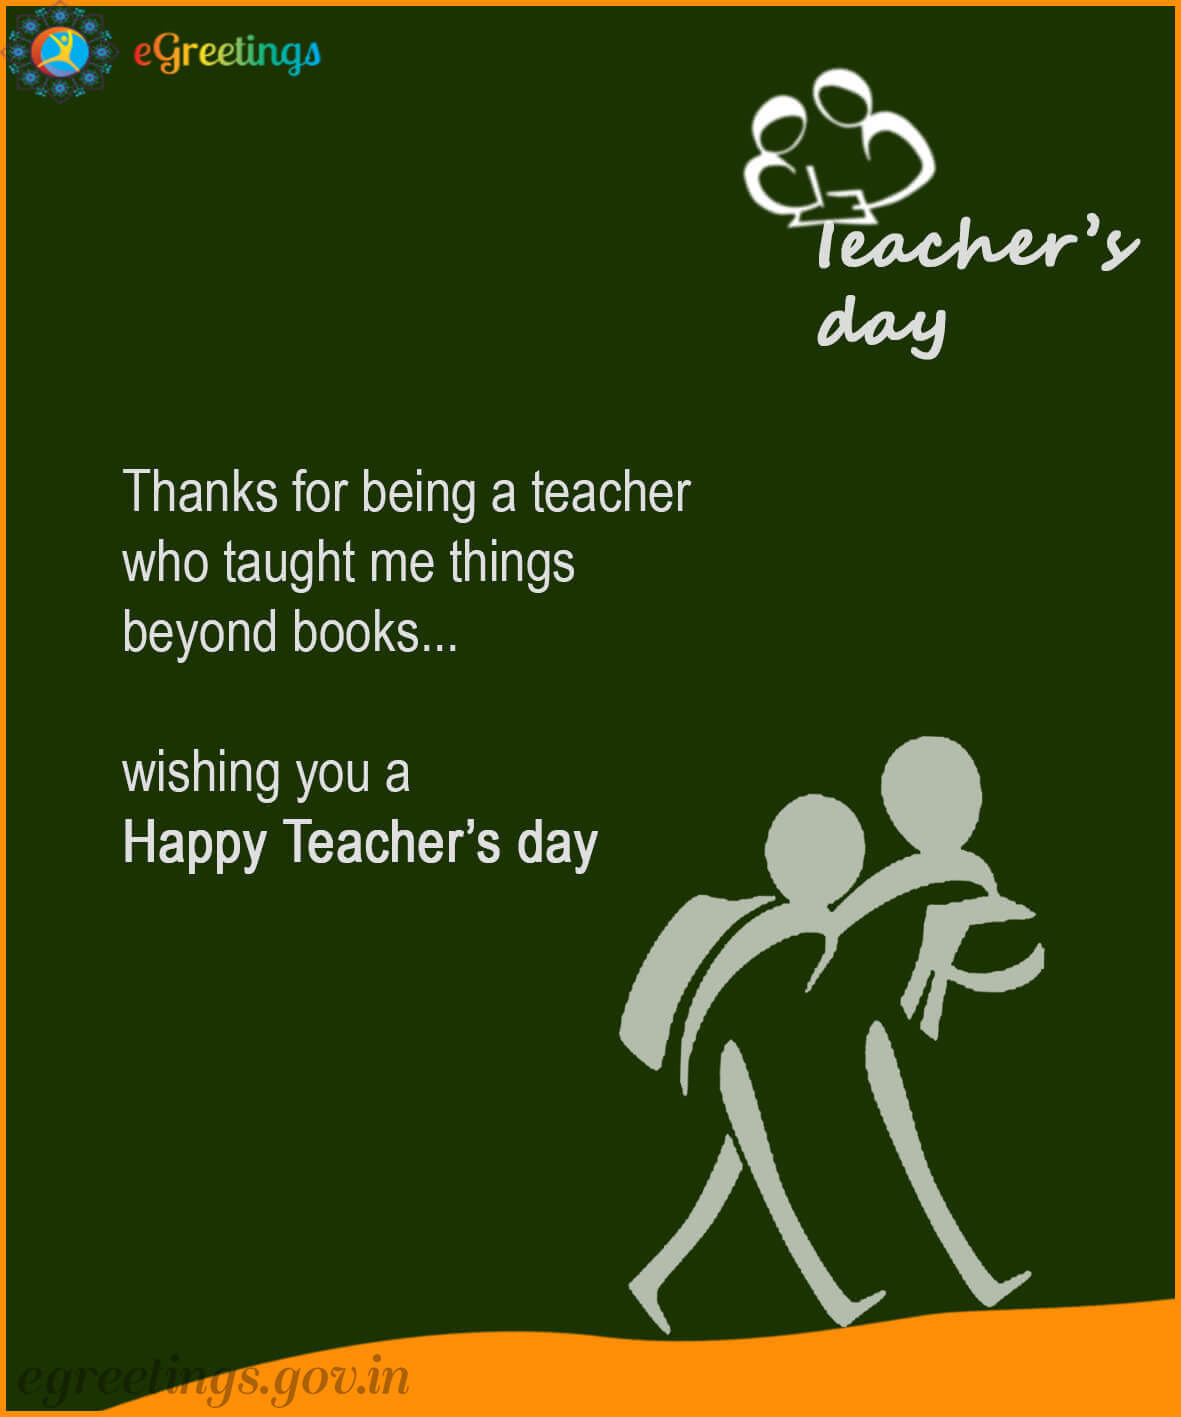 Teachers Day 2016 | eGreetings Portal